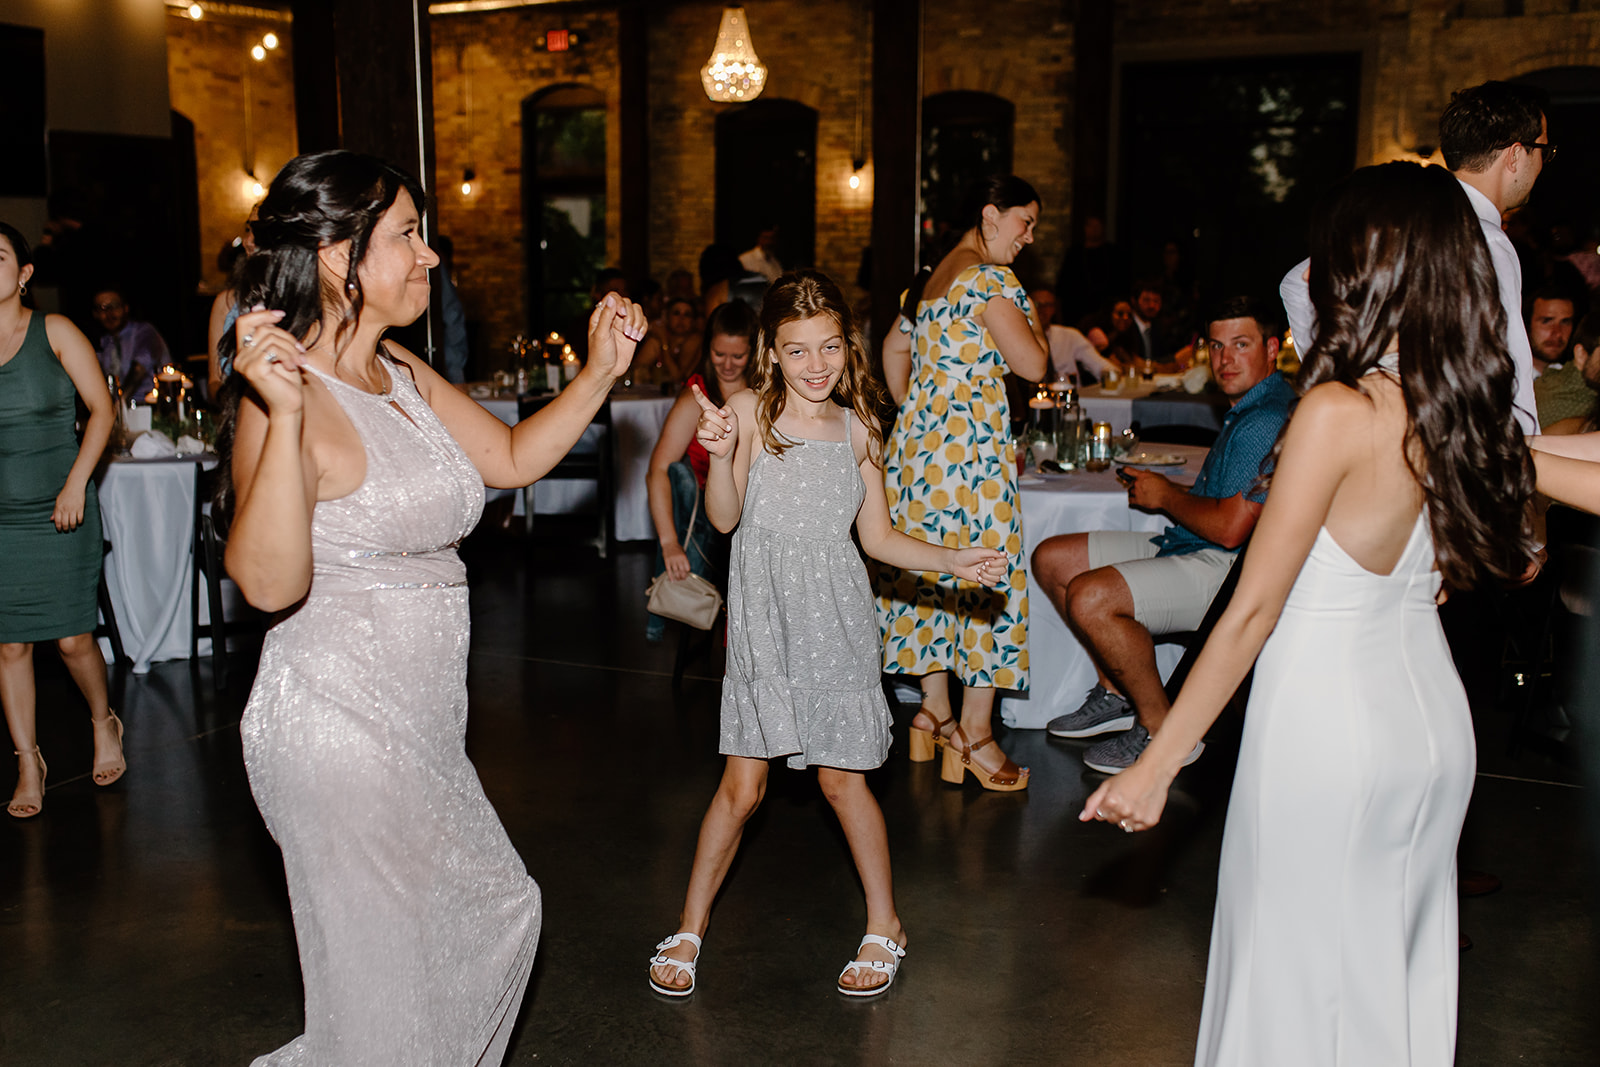 Bride dances with guests on the dance floor